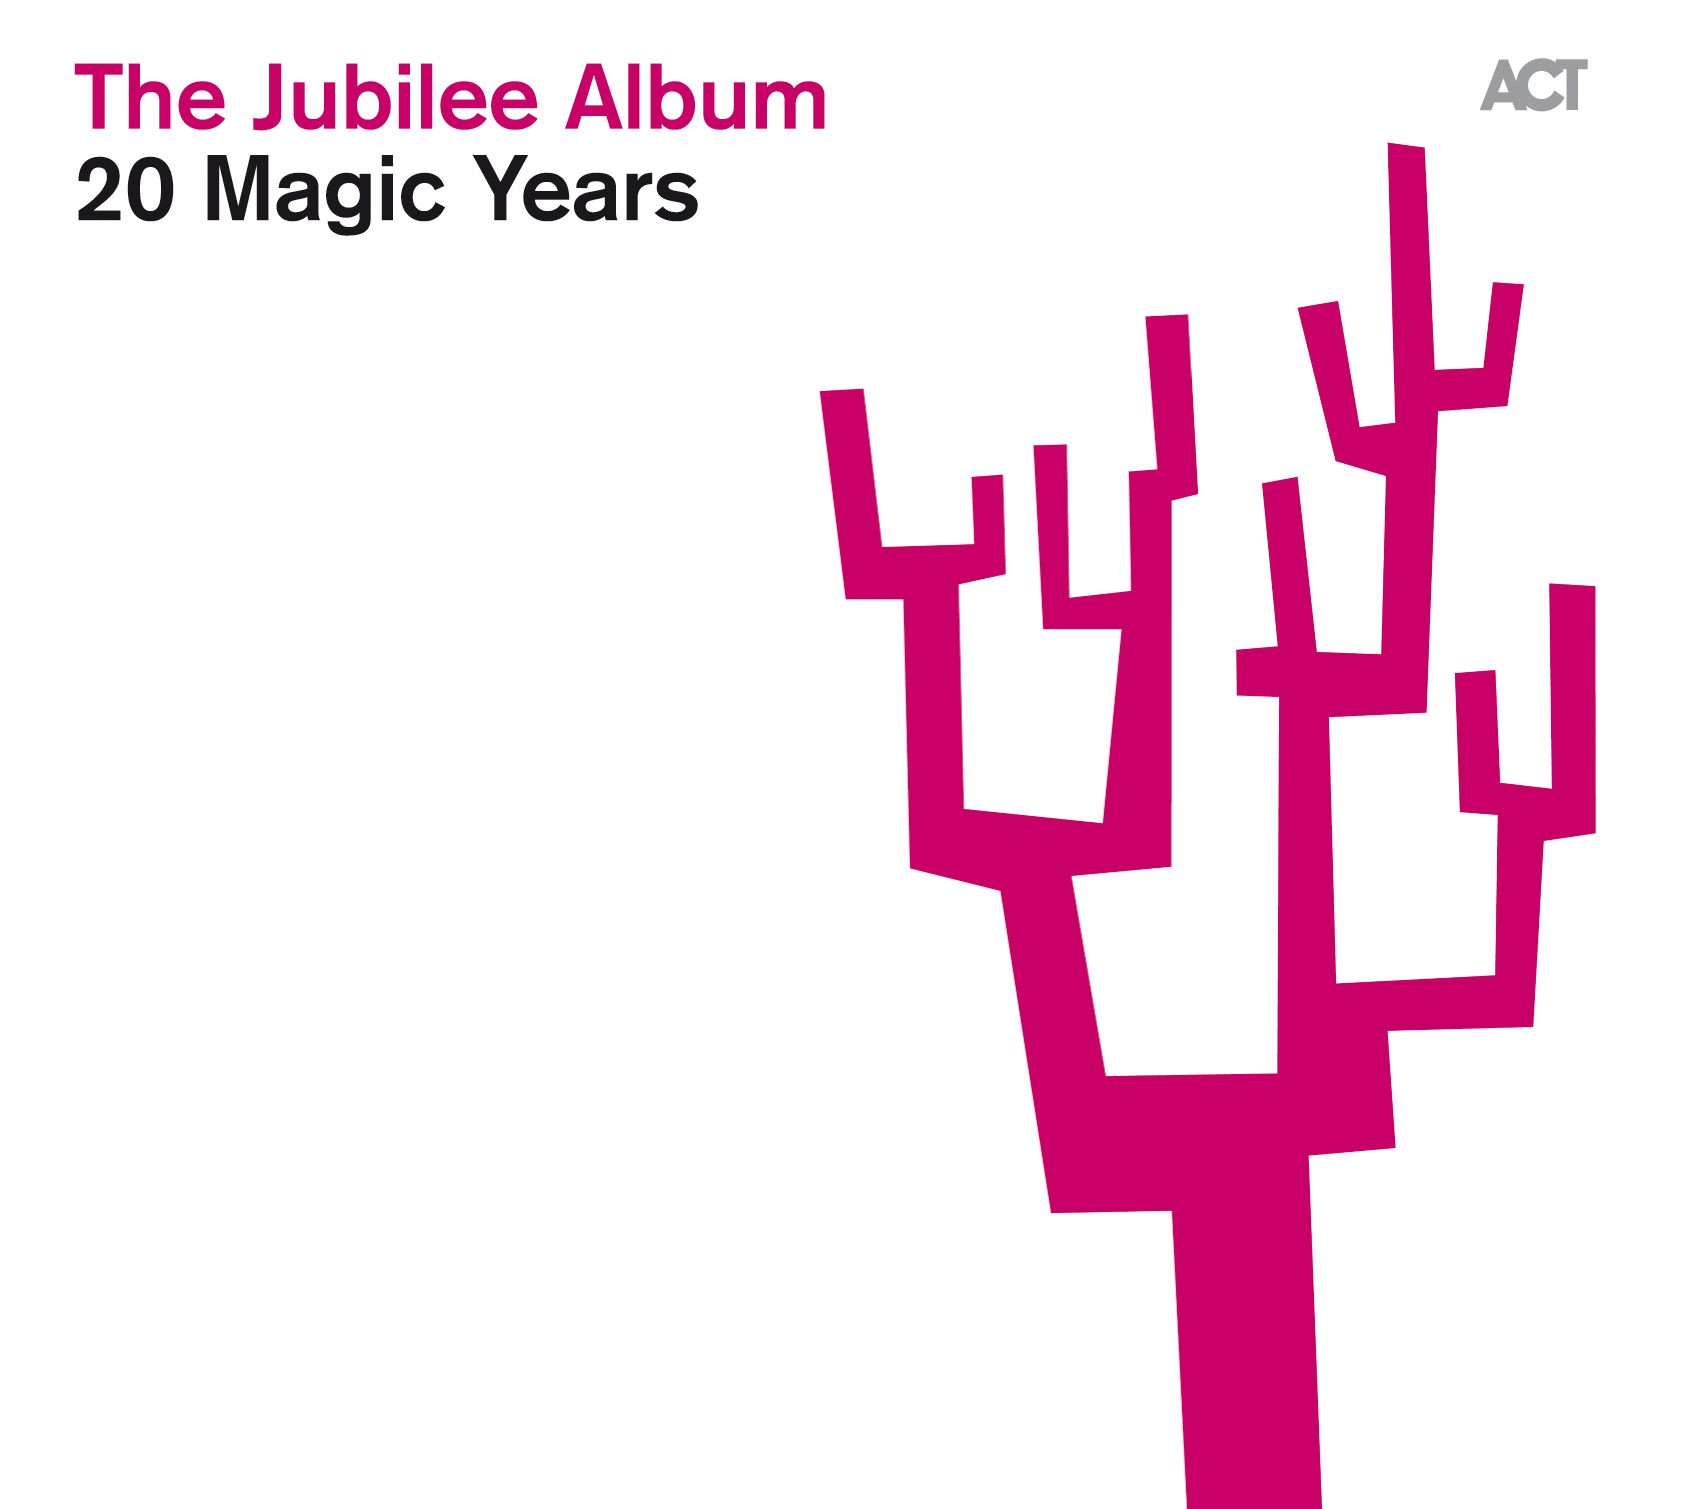 The Jubilee Album: 20 Magic Years